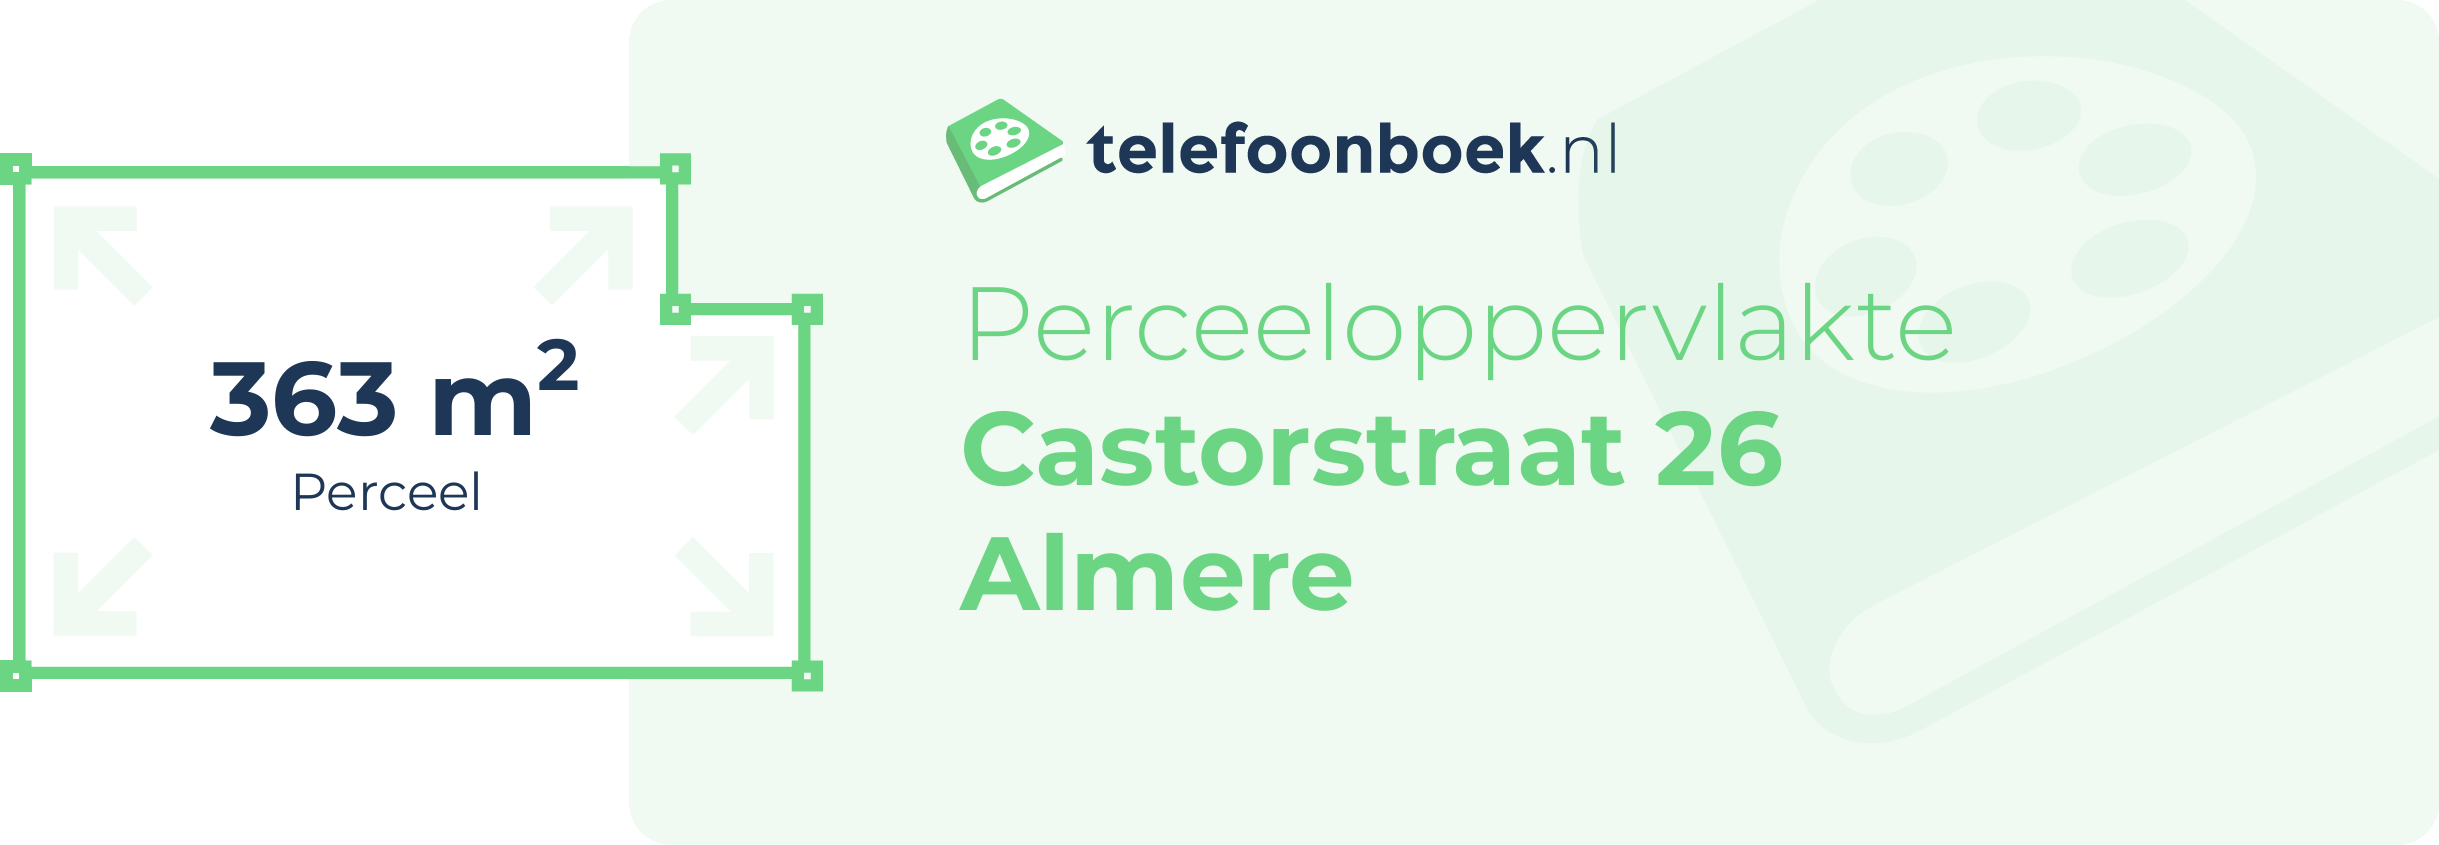 Perceeloppervlakte Castorstraat 26 Almere